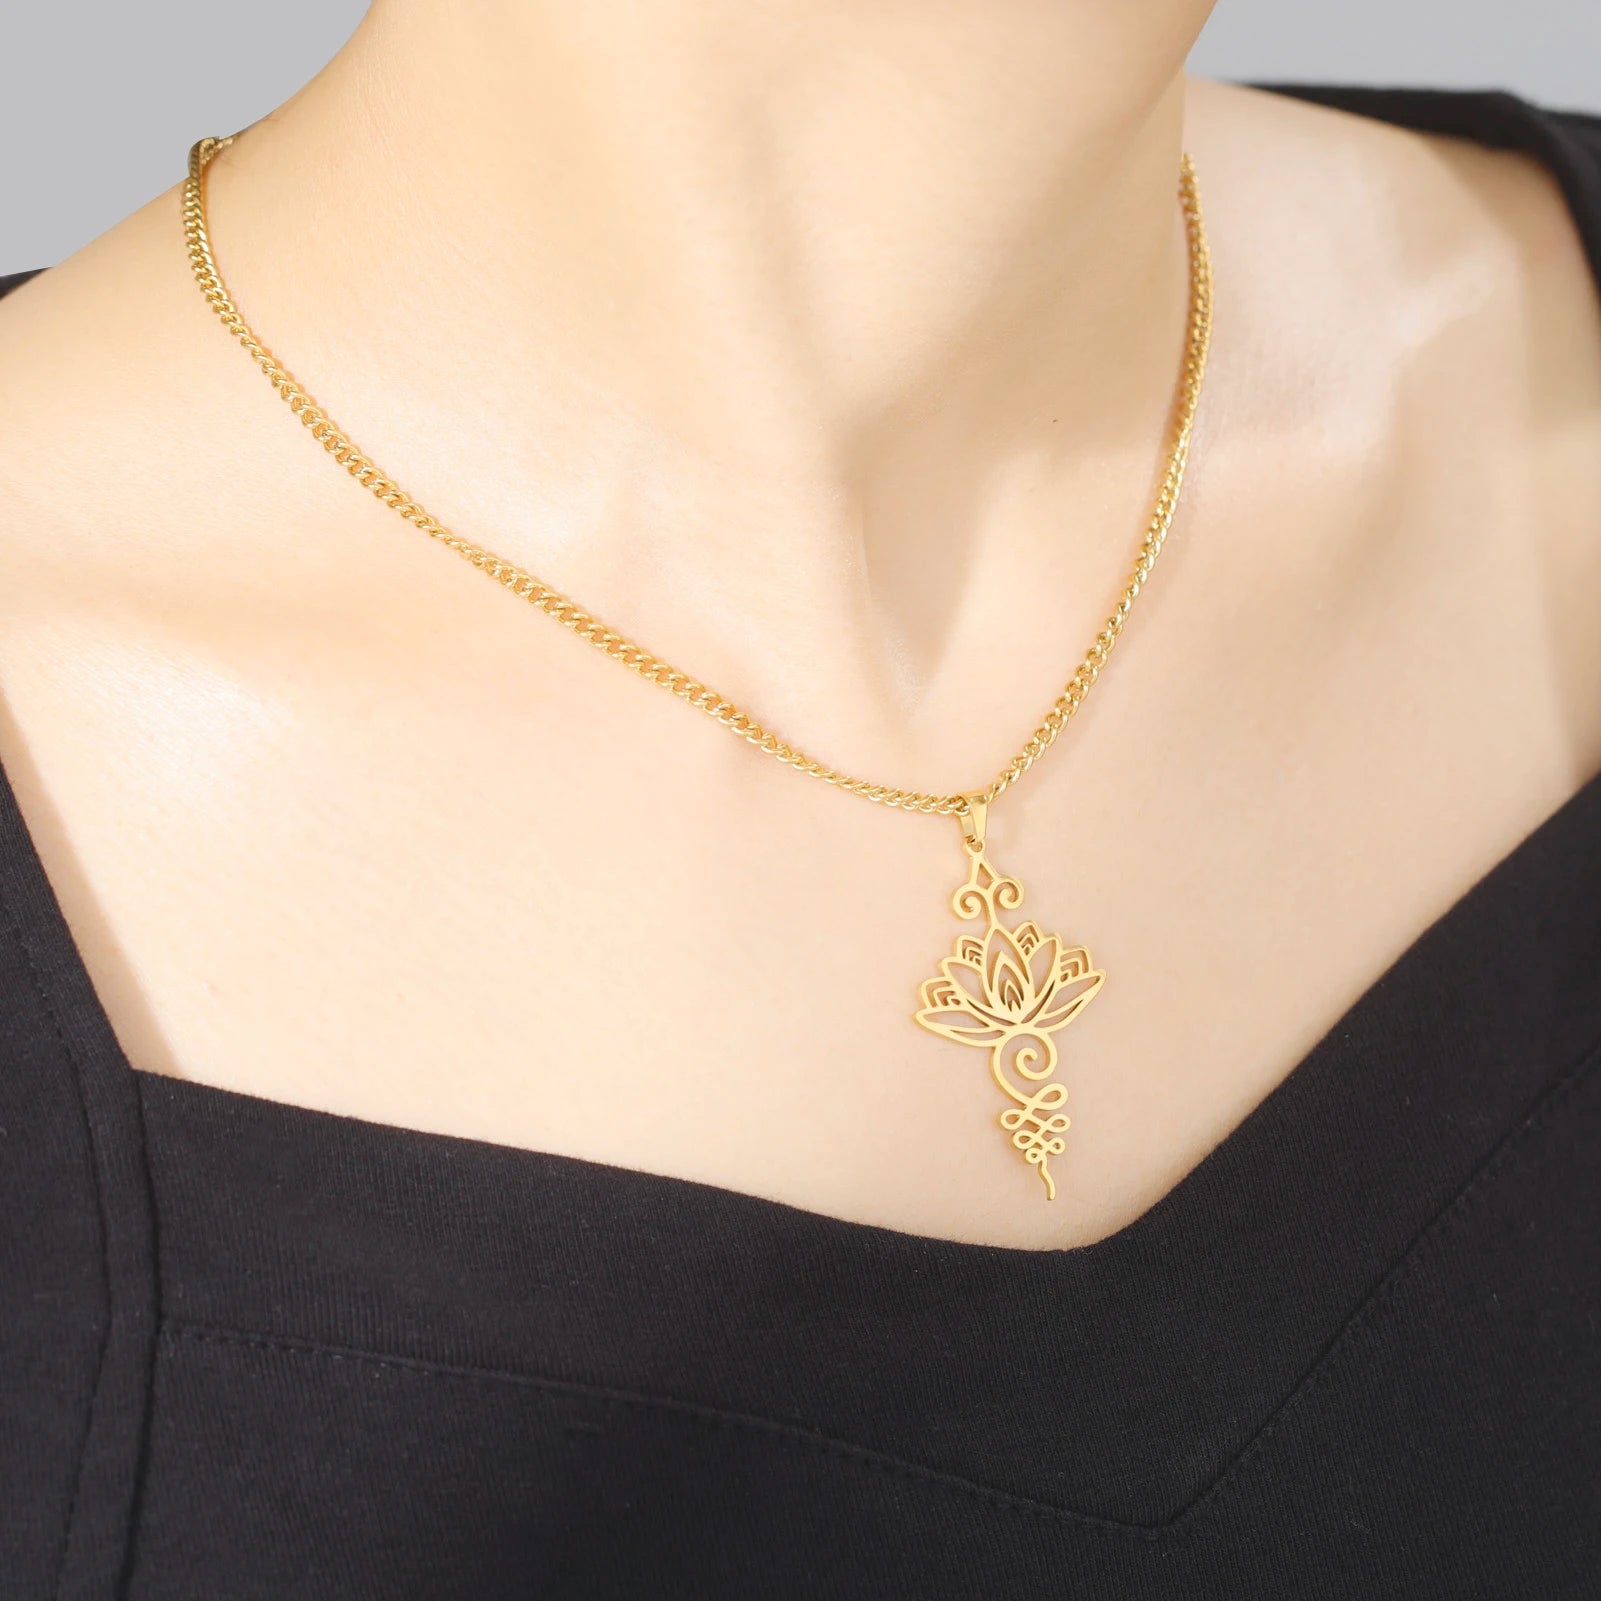 Unalome Lotus Flower Symbol Pendant Necklace - Mystical Rose Gems